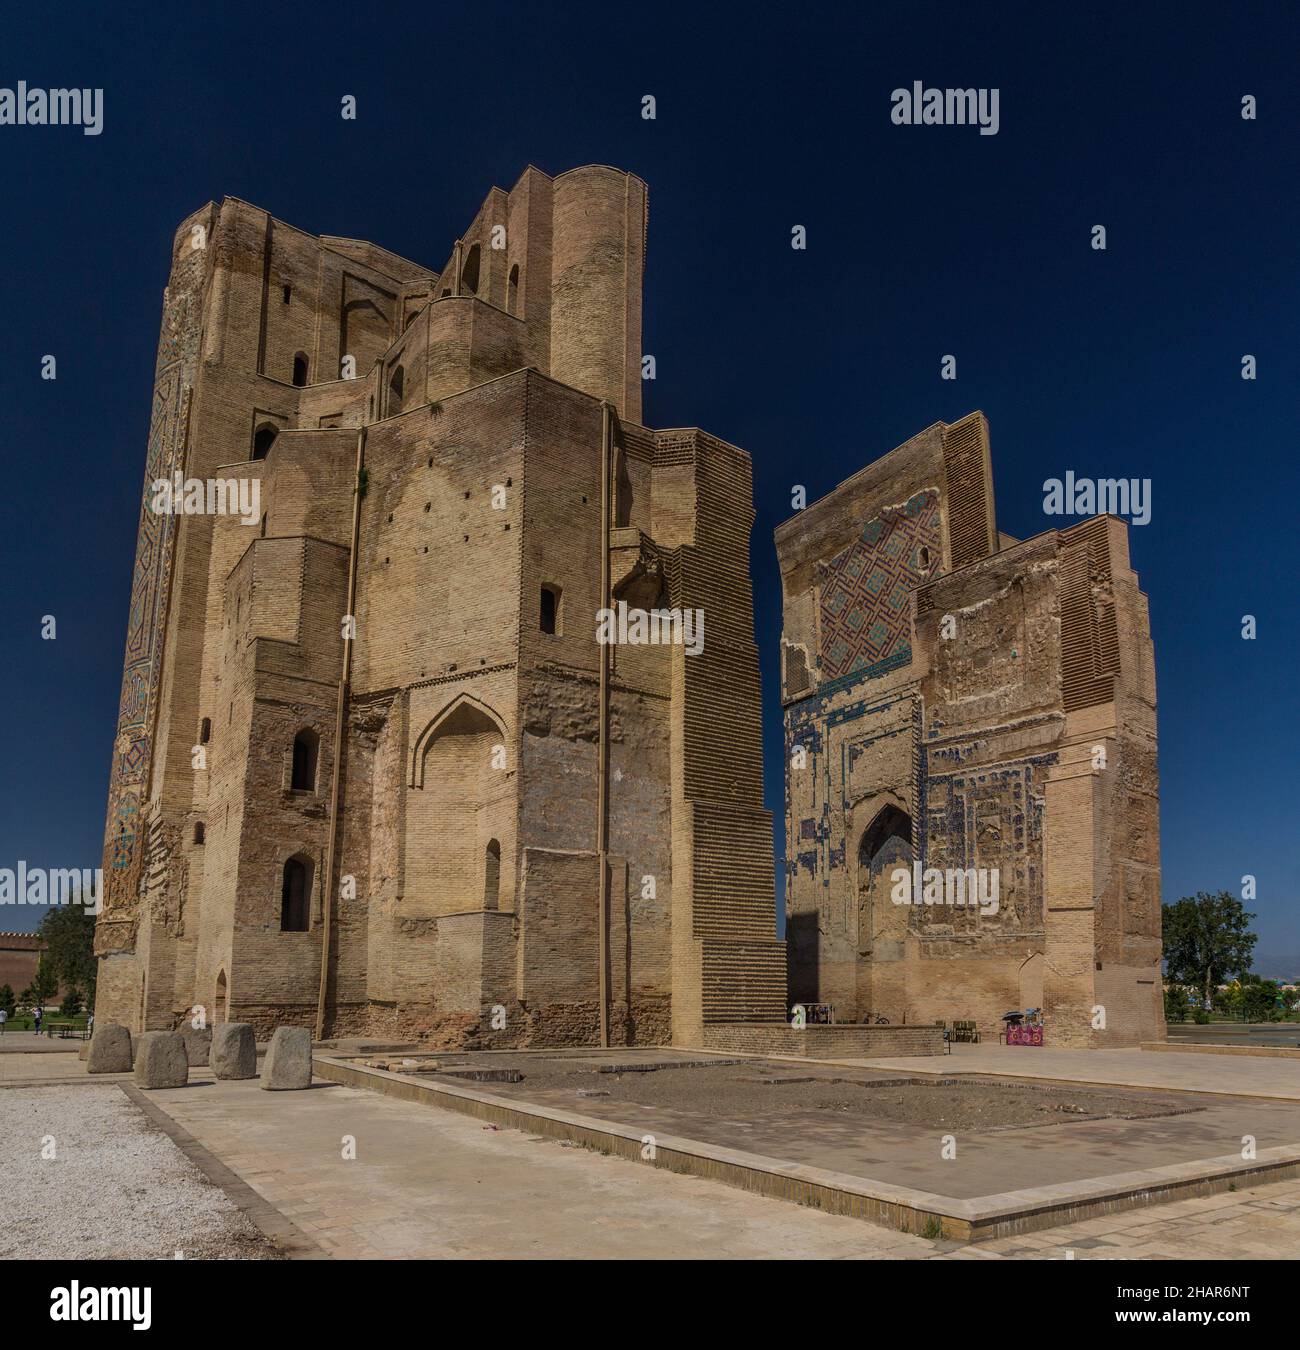 AK Saray palazzo rovine in Shahrisabz, Uzbekistan Foto Stock